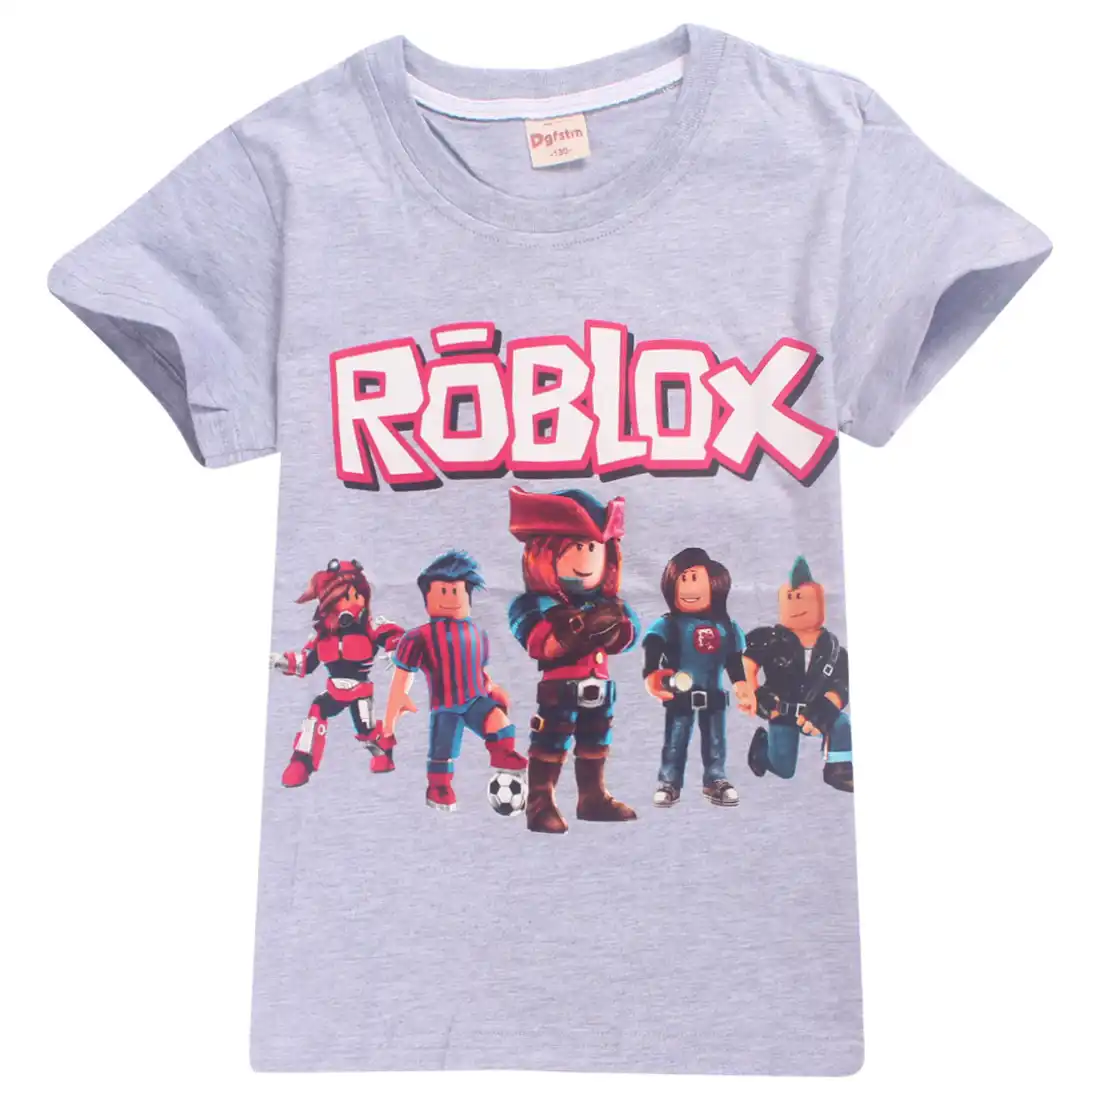 Roblox T Shirt Imagenes